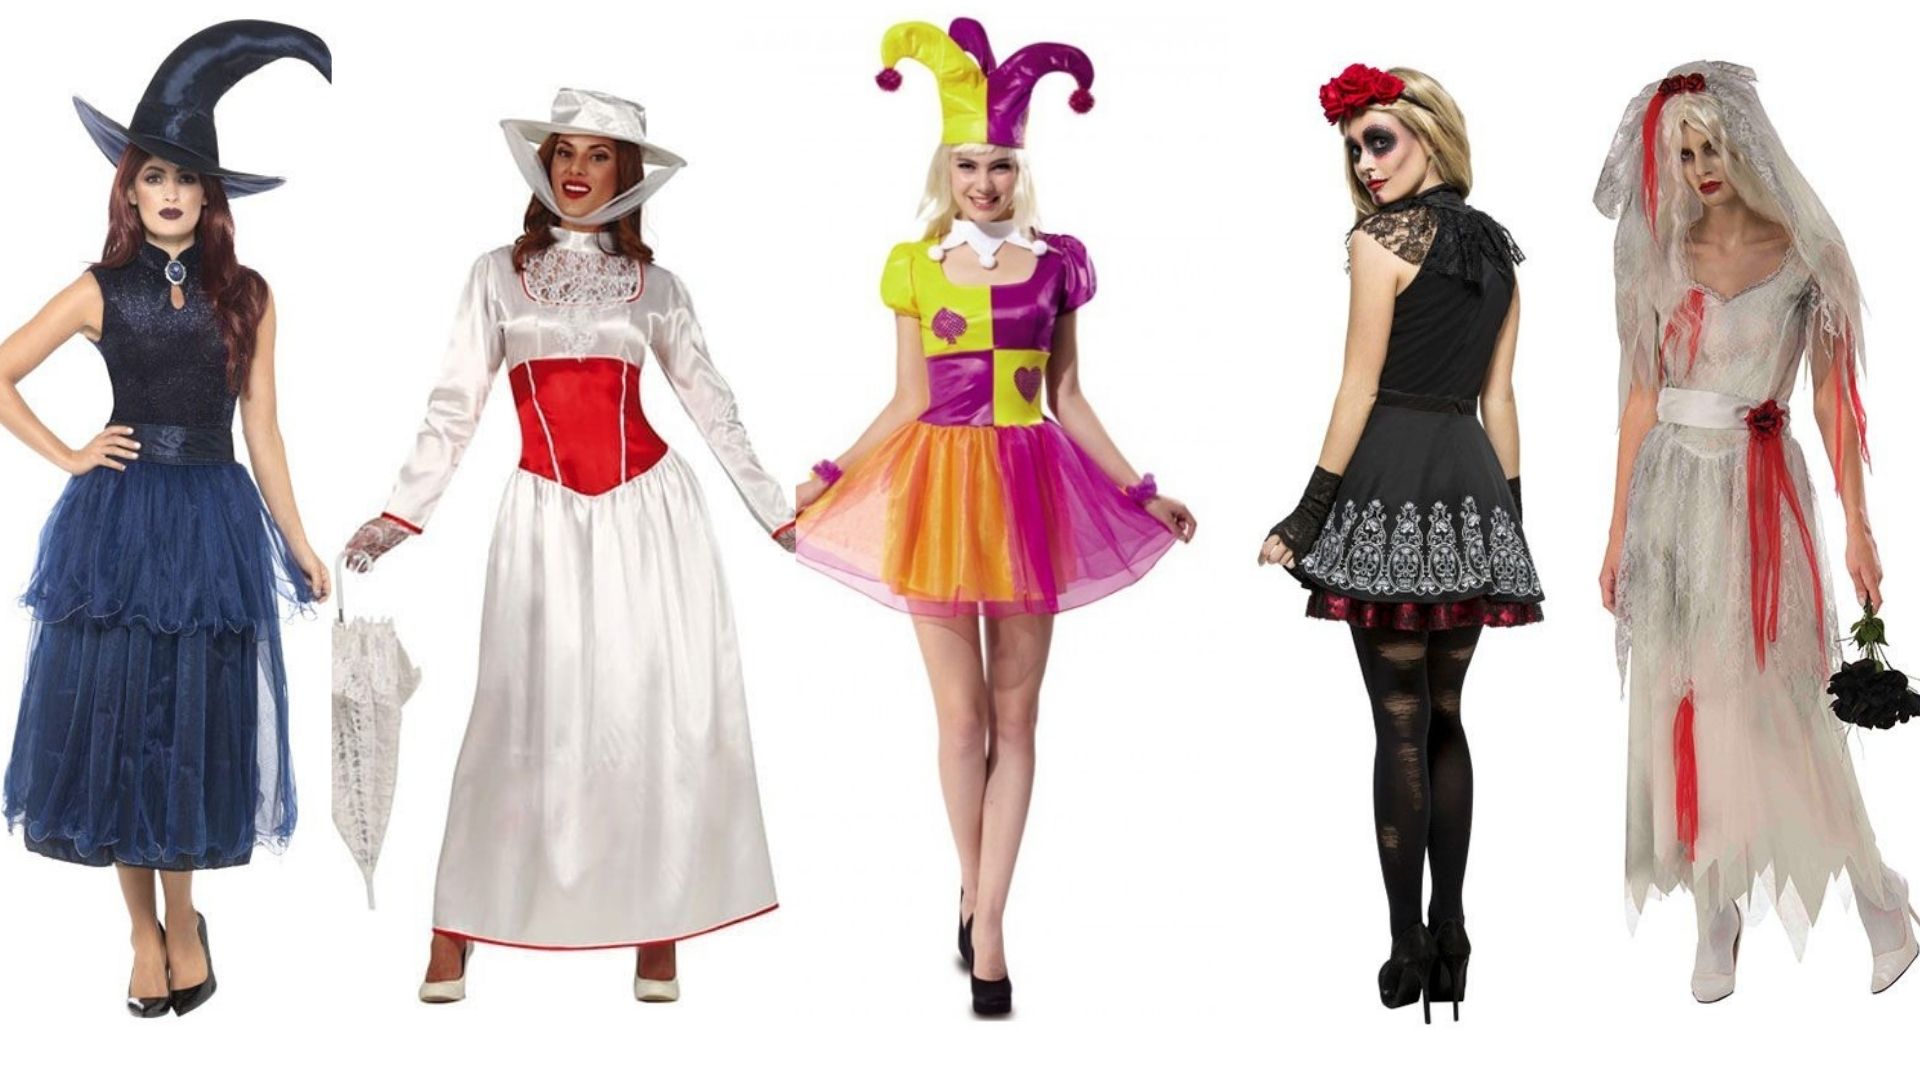 Accessori e costumi Carnevale fai da te maschere vestiti feste a